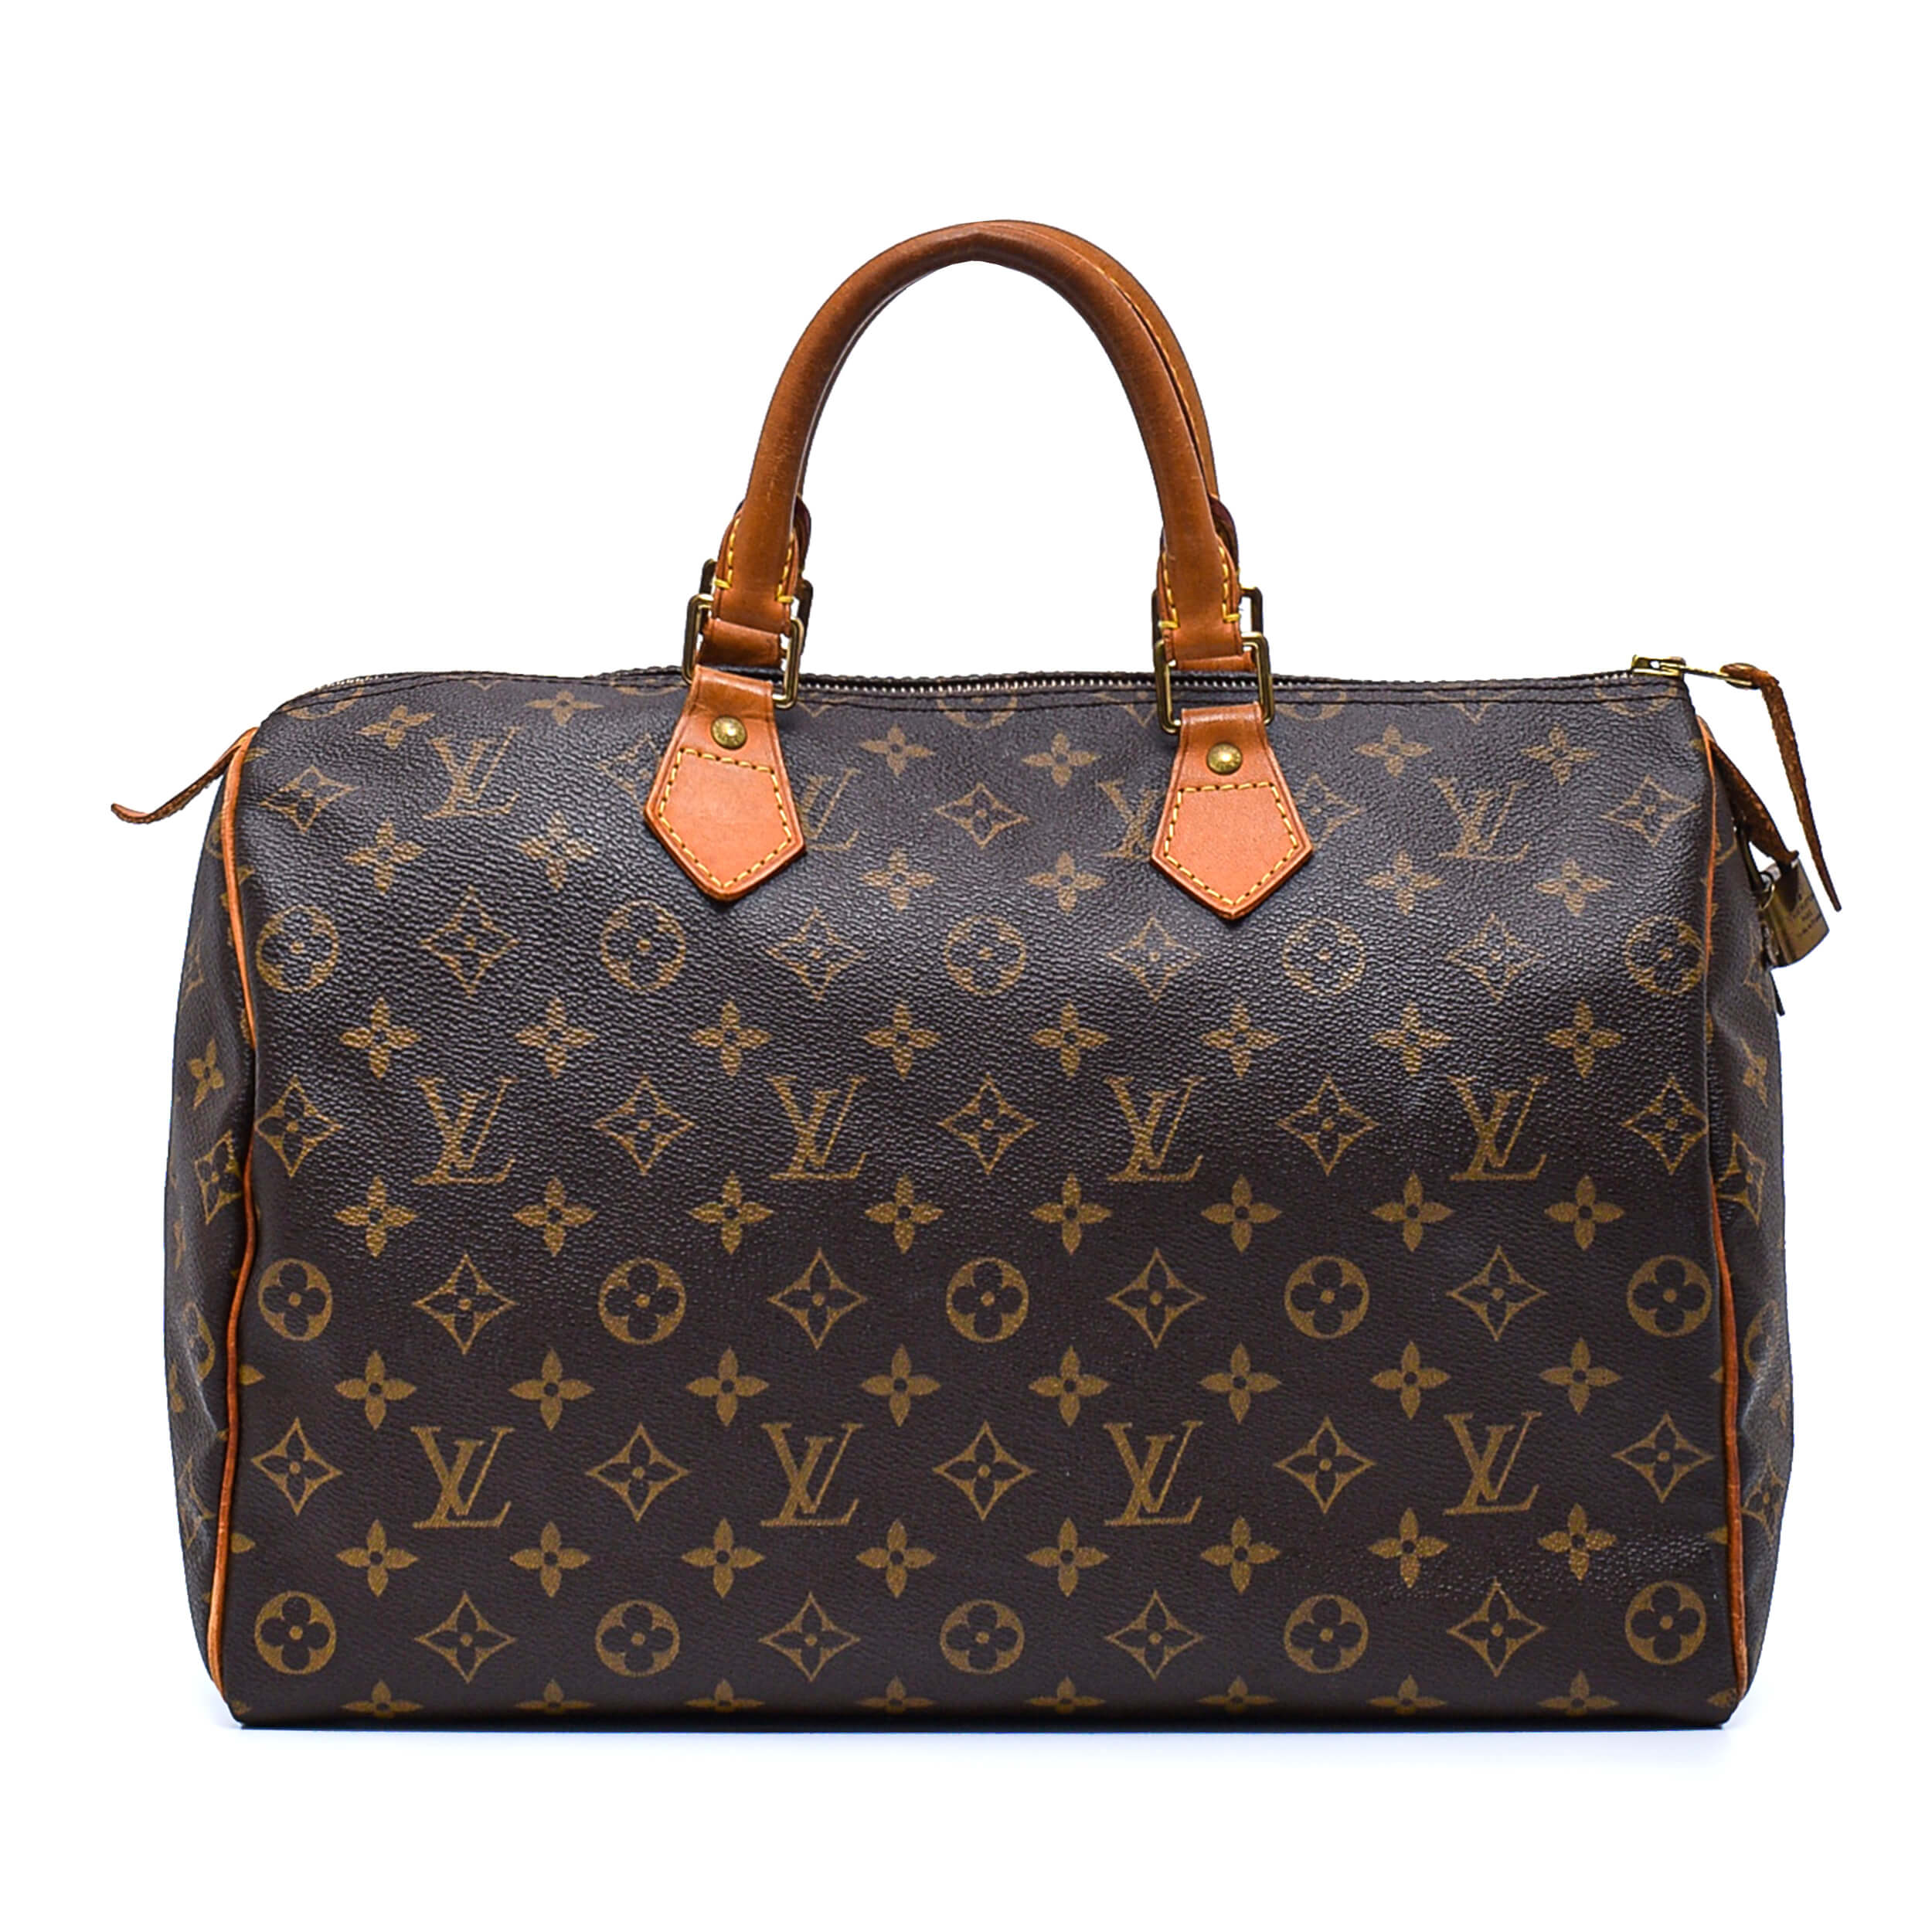 Louis Vuitton - Monogram Canvas Speedy 35 Bag